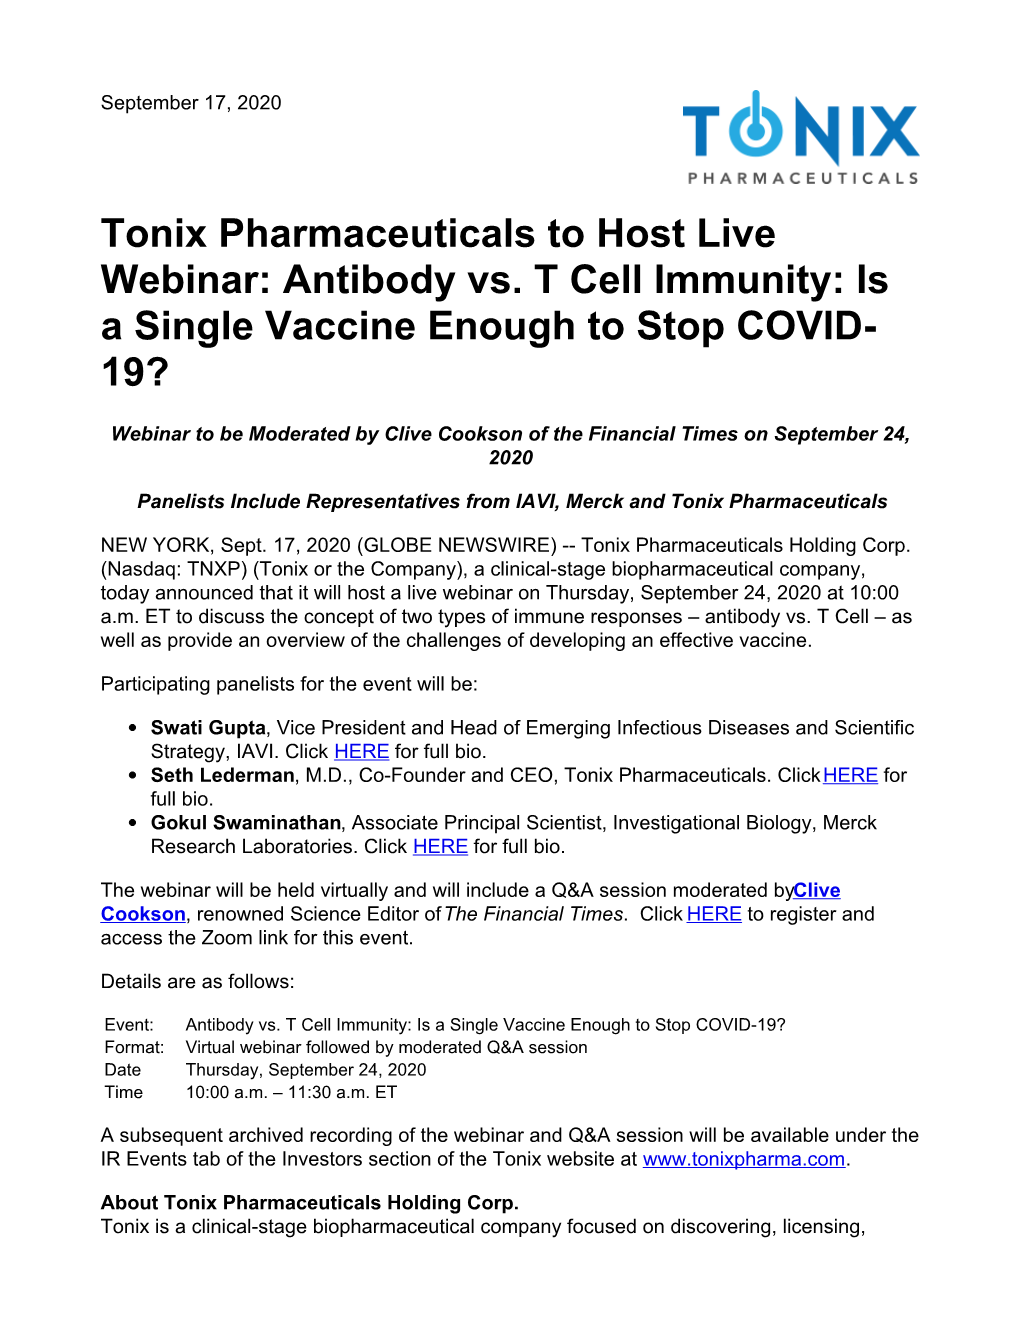 Tonix Pharmaceuticals to Host Live Webinar: Antibody Vs